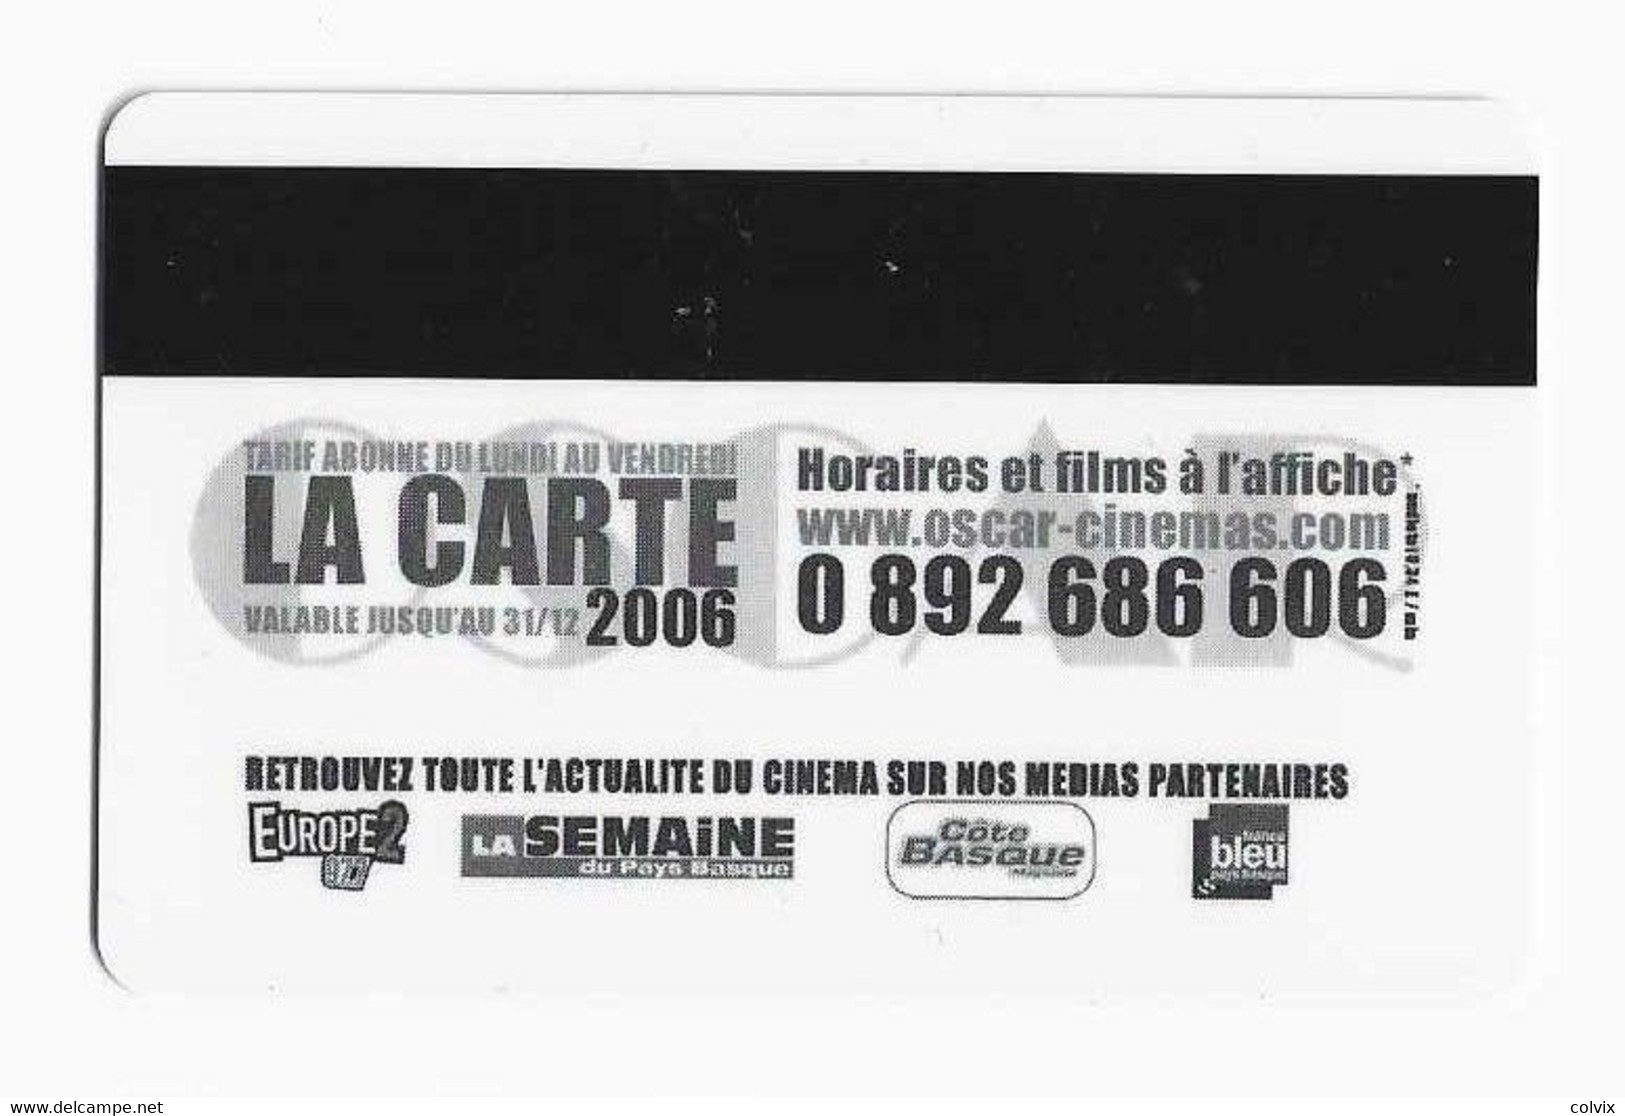 FRANCE CARTE CINEMA OSCAR - Biglietti Cinema